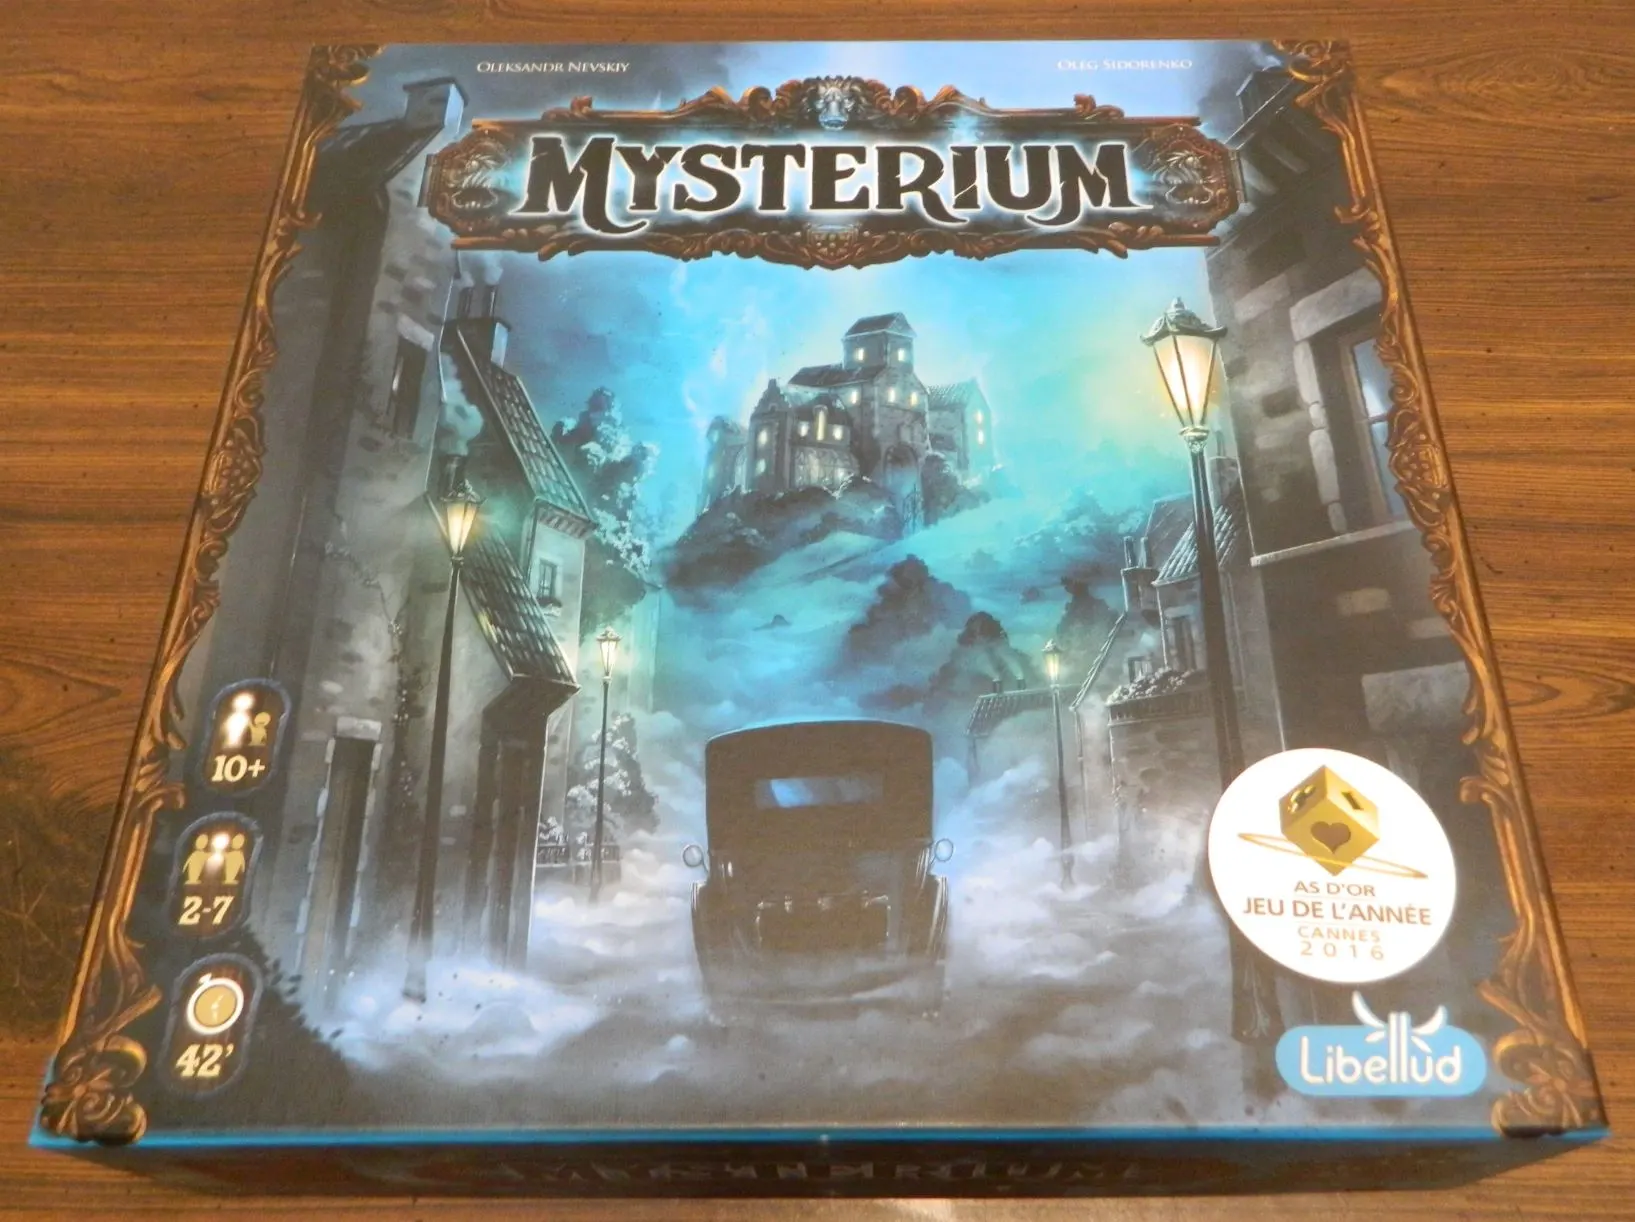 Box for Mysterium